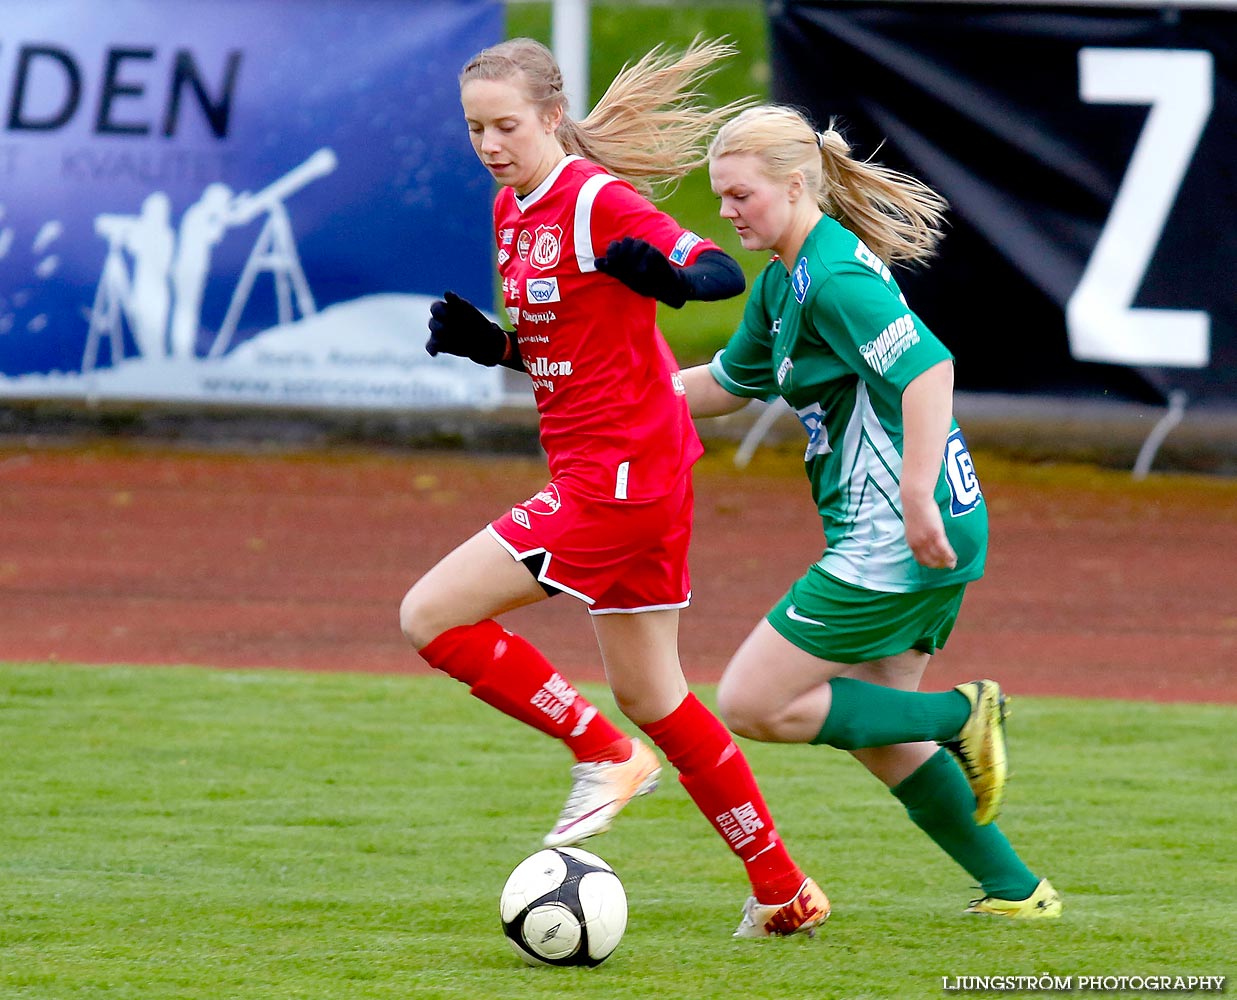 Falköpings KIK-Våmbs IF 7-1,dam,Odenplan,Falköping,Sverige,Fotboll,,2015,116402